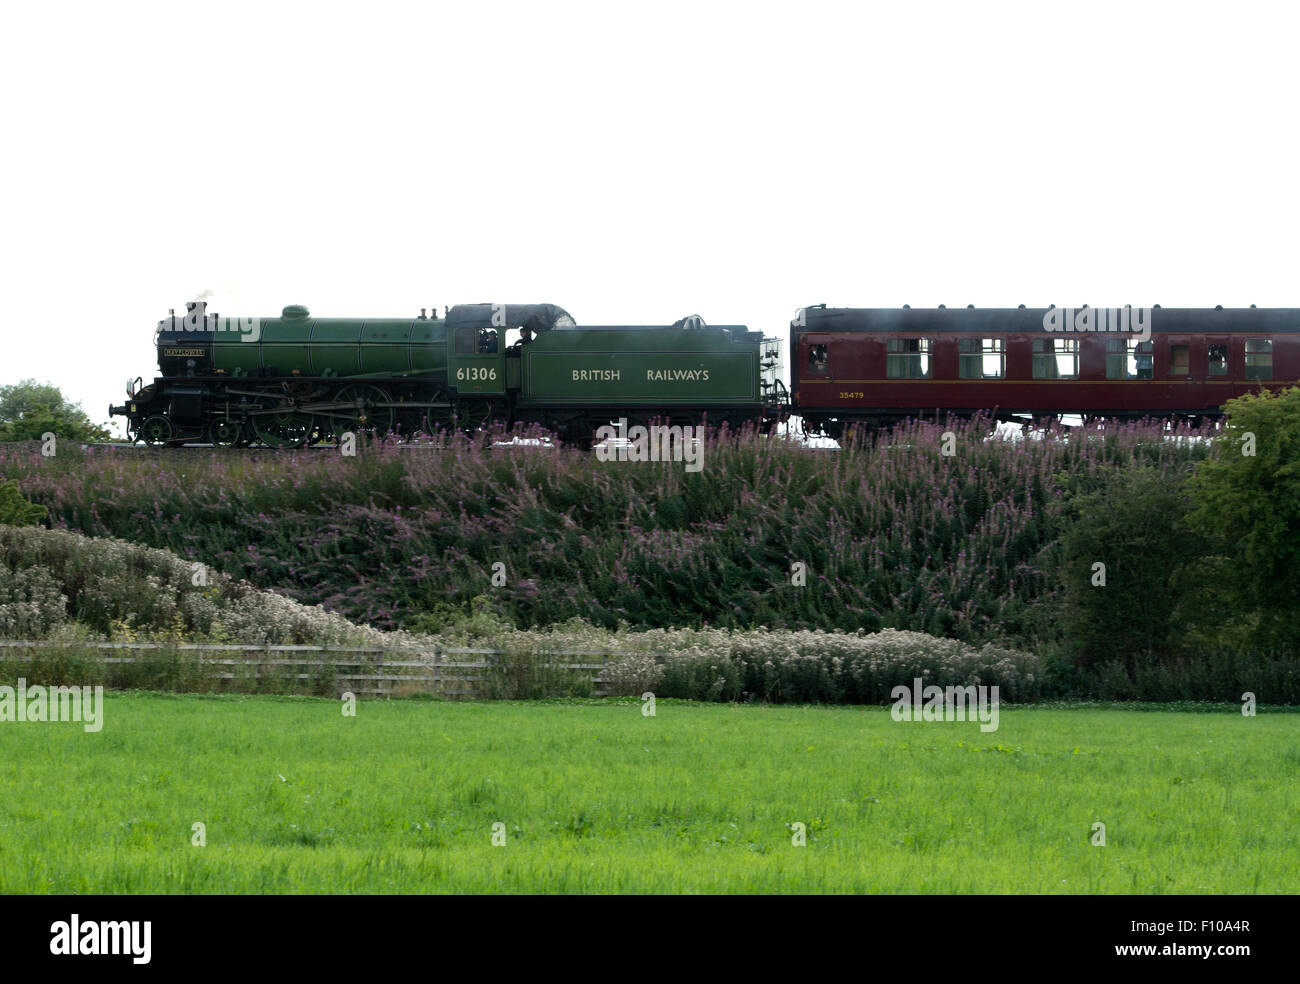 Former LNER B1 class steam locomotive No. 61306 'Mayflower' Stock Photo